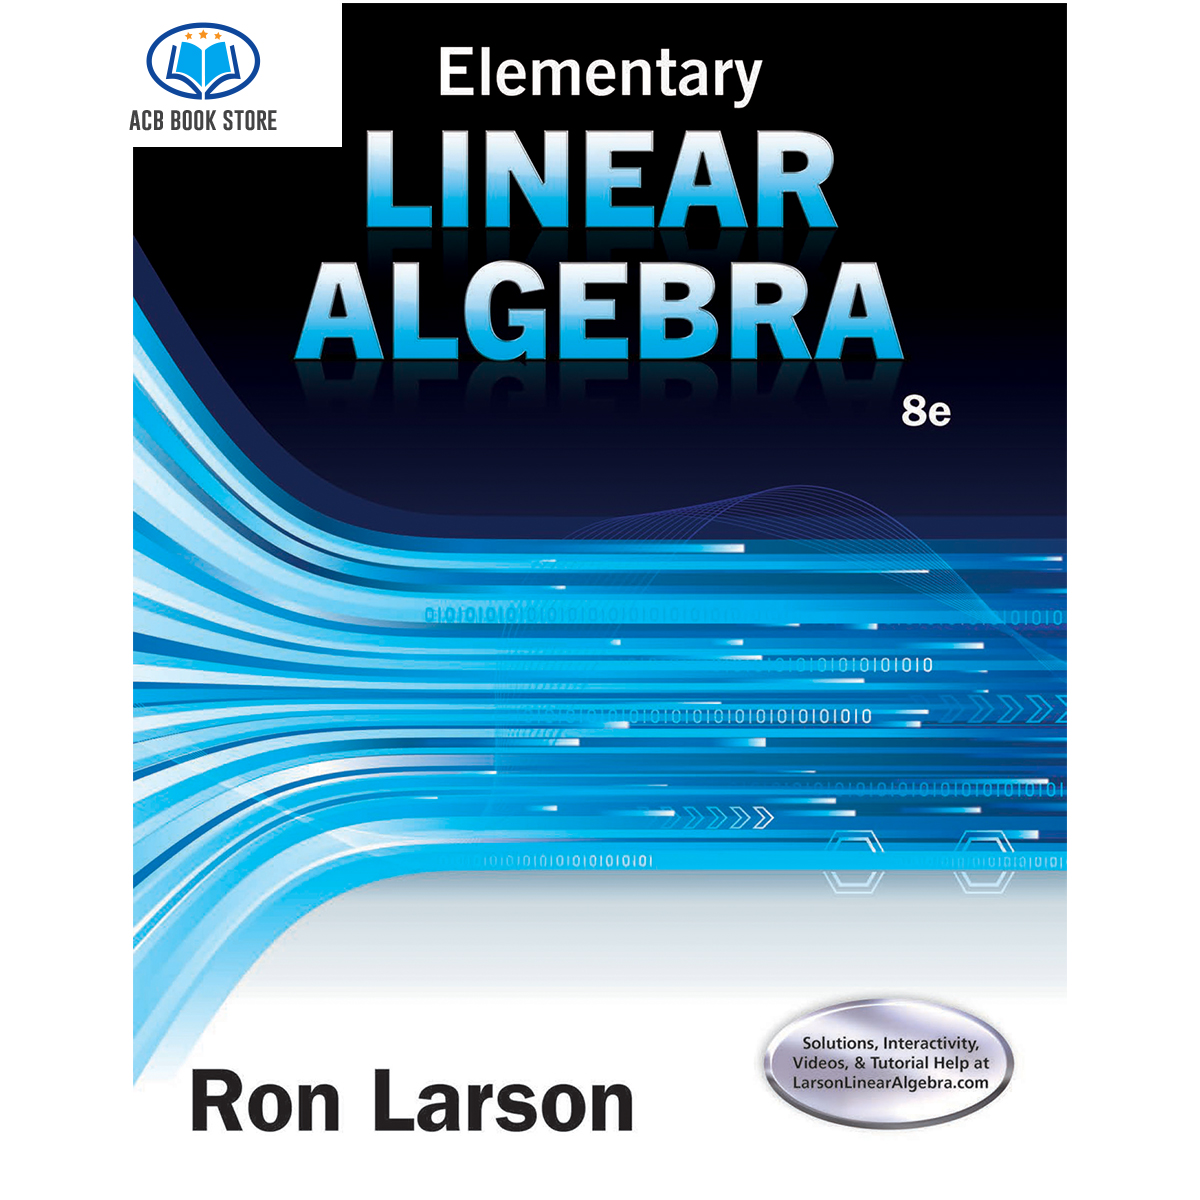 Sách Elementary Linear Algebra  sach den trang  - ACB Bookstore